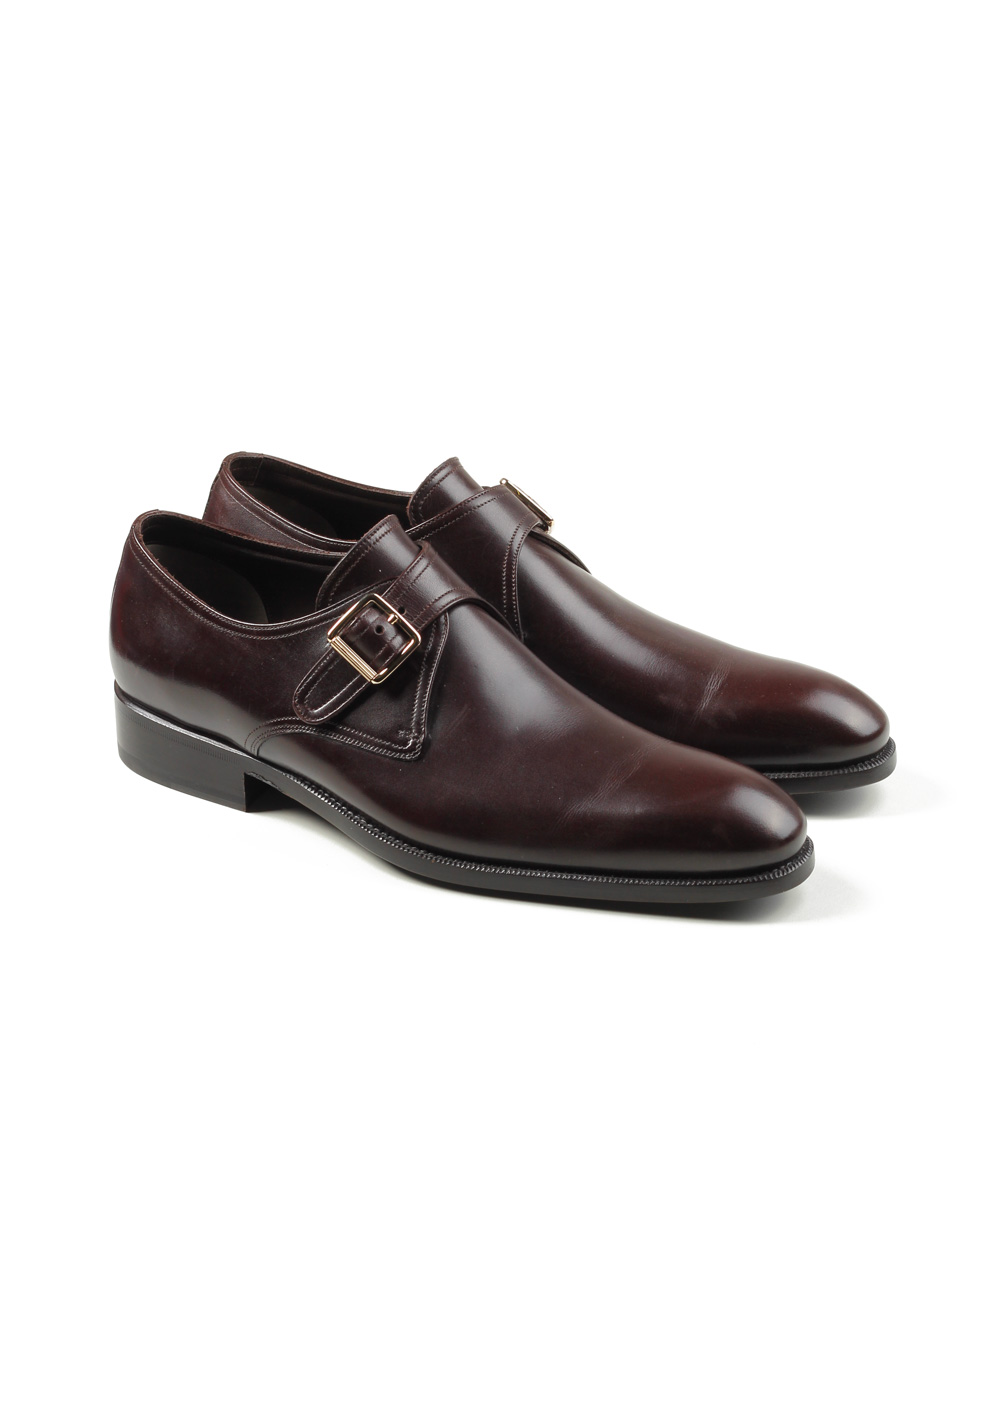 TOM FORD Brown Monk Strap Shoes Size 10.5T Uk / 11.5T U.S. | Costume Limité